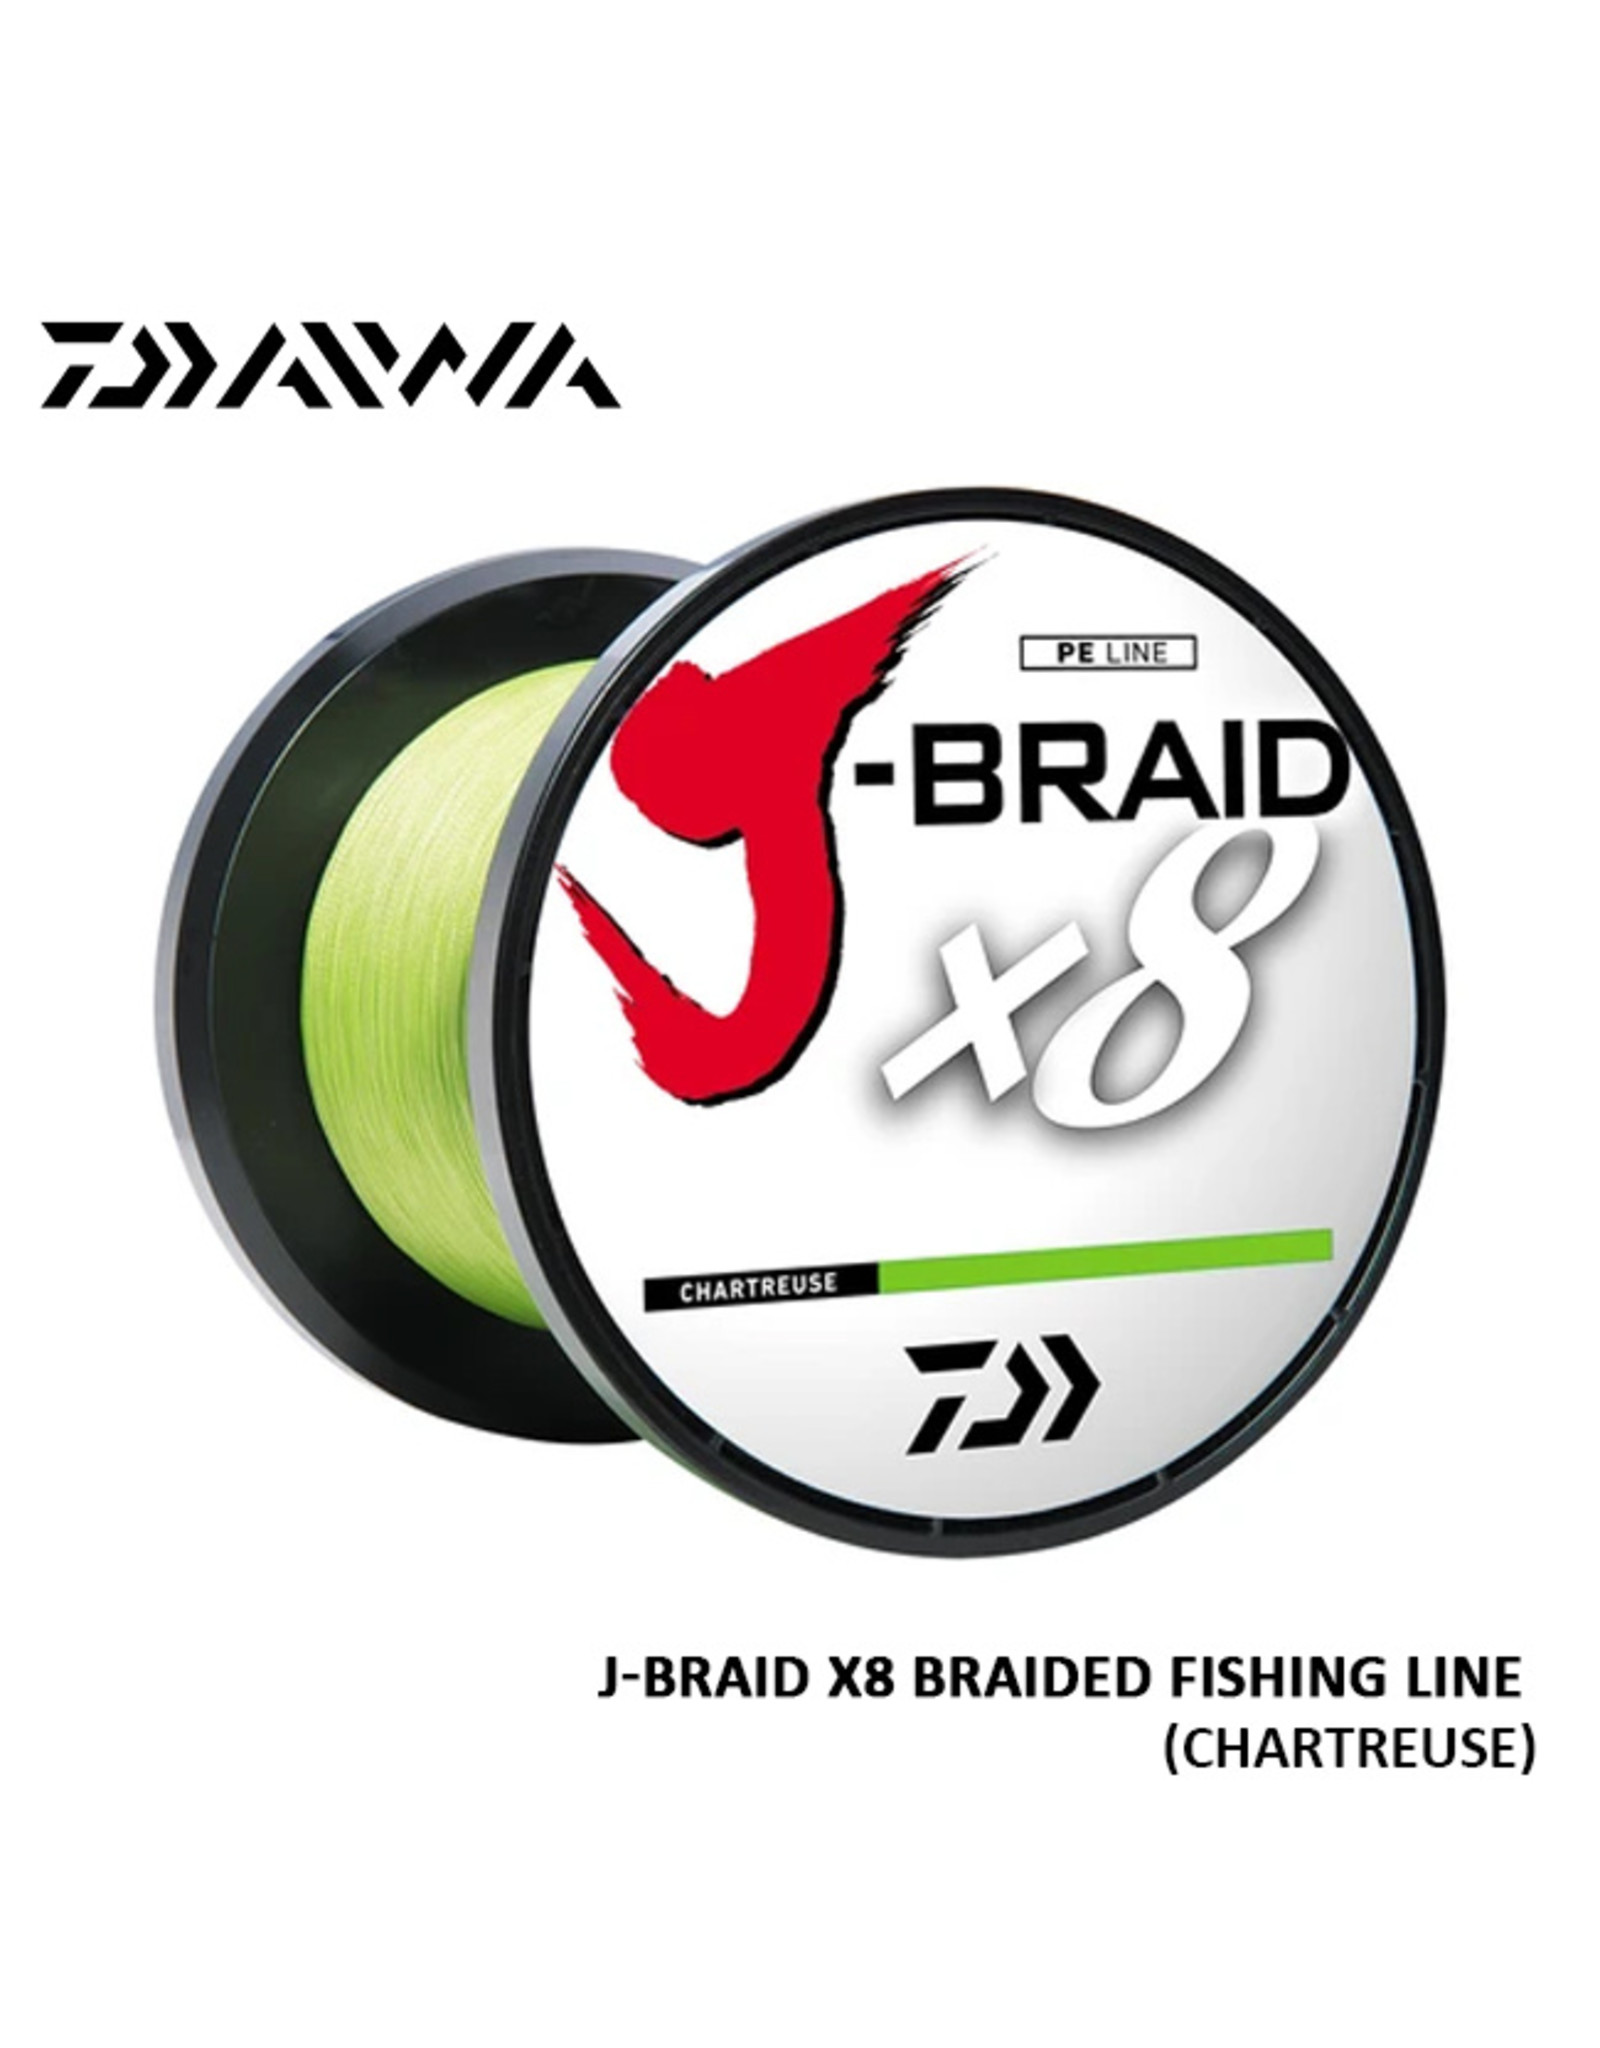 DAIWA (DAI) DAI, J-BRAID X8 FISHING LINE 300METER/CHARTREUSE 80#